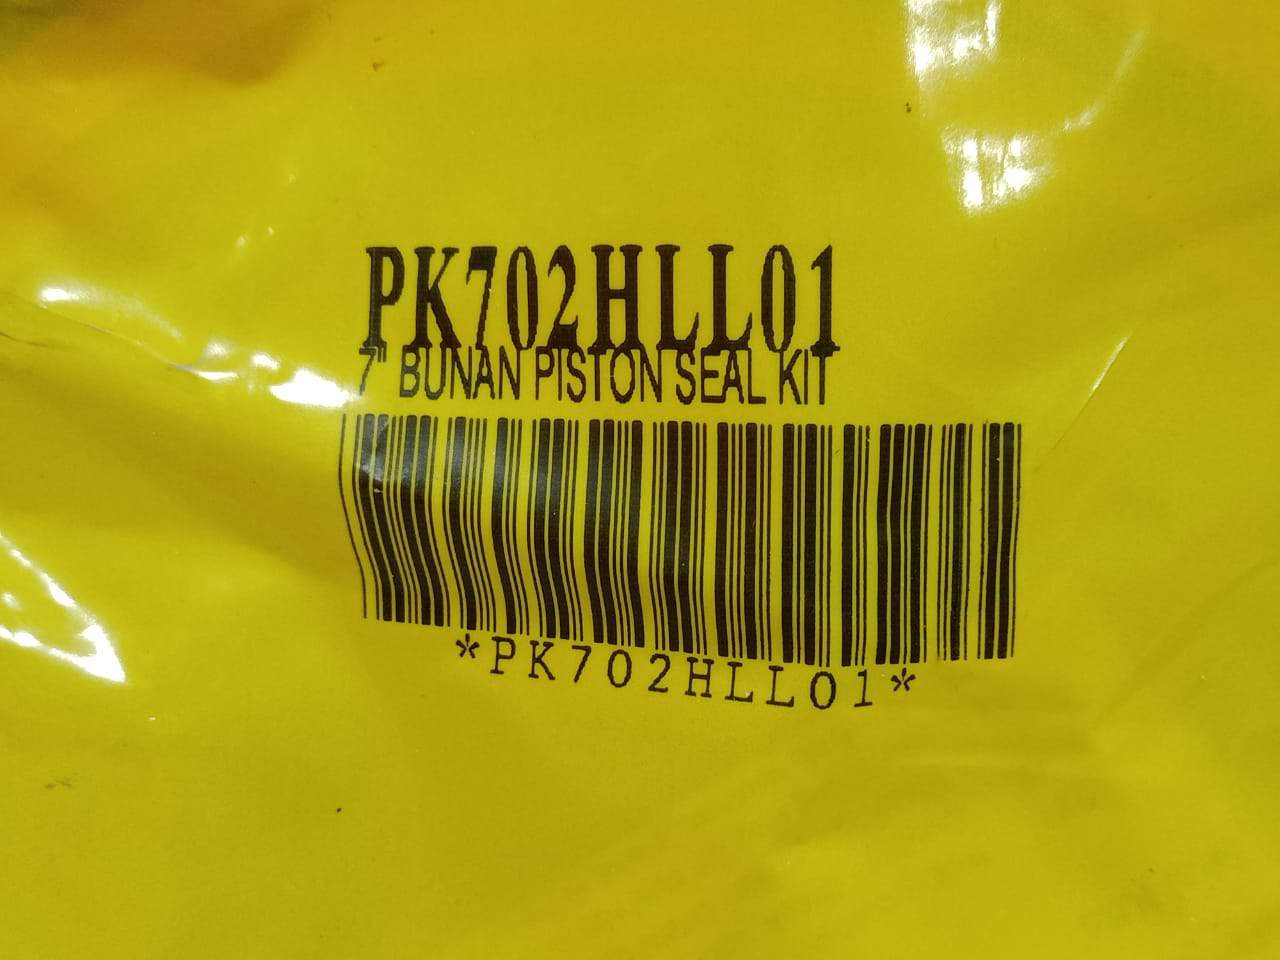 Parker PK702HLL01 7Inch Bunan Piston Seal Kit